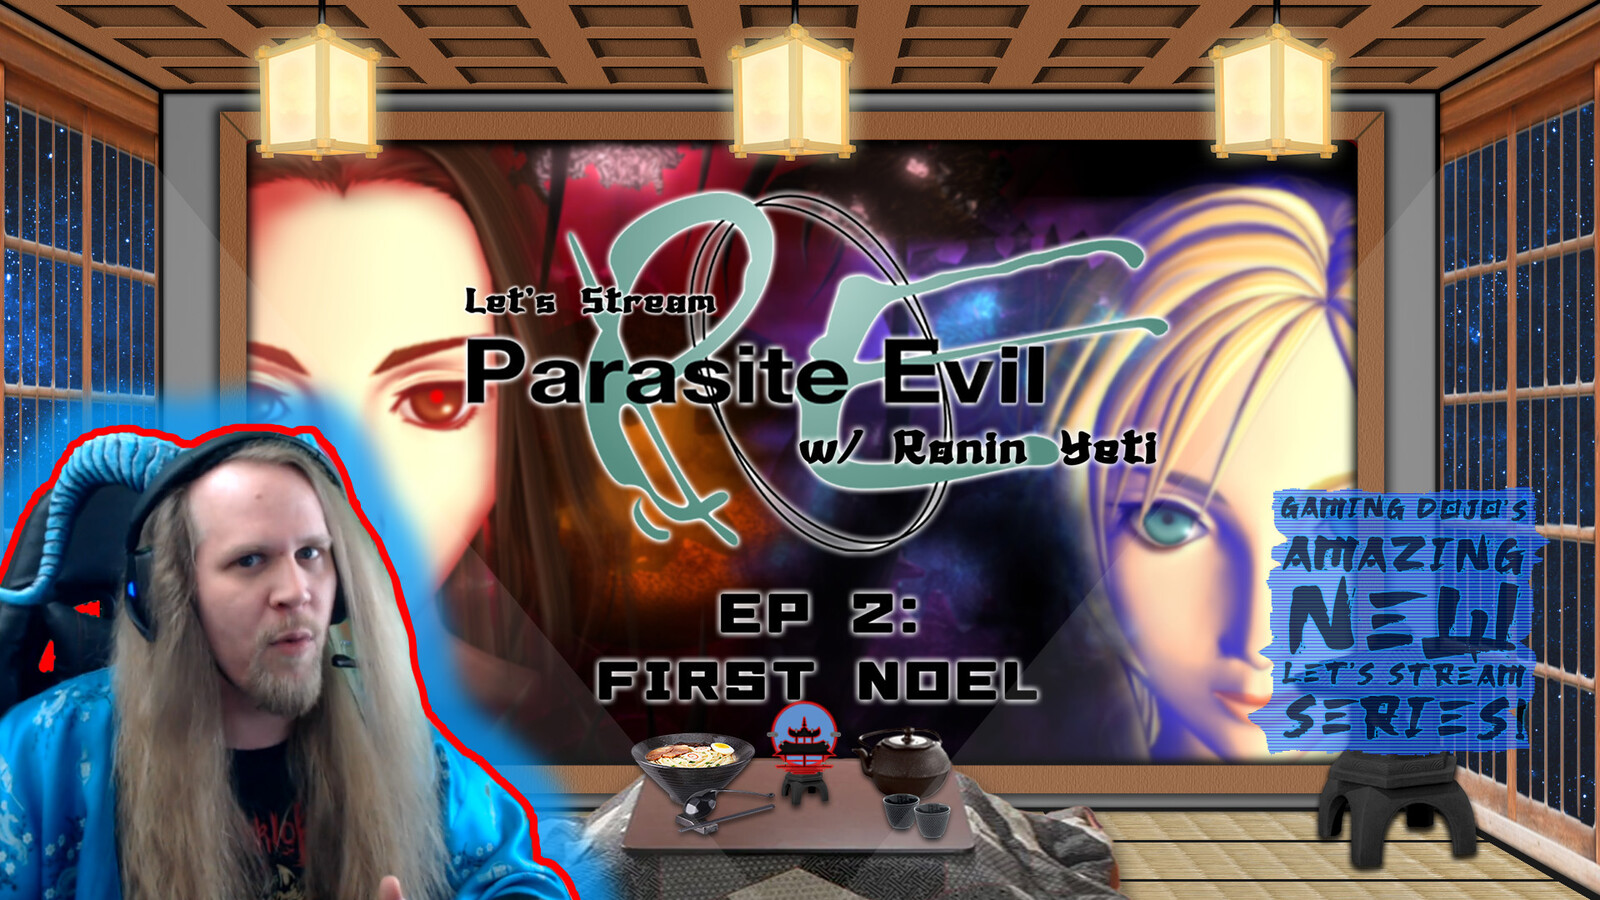 "Let's Stream Parasite Evil" Episode 2 Image | Ronin Yeti Twitch Streaming